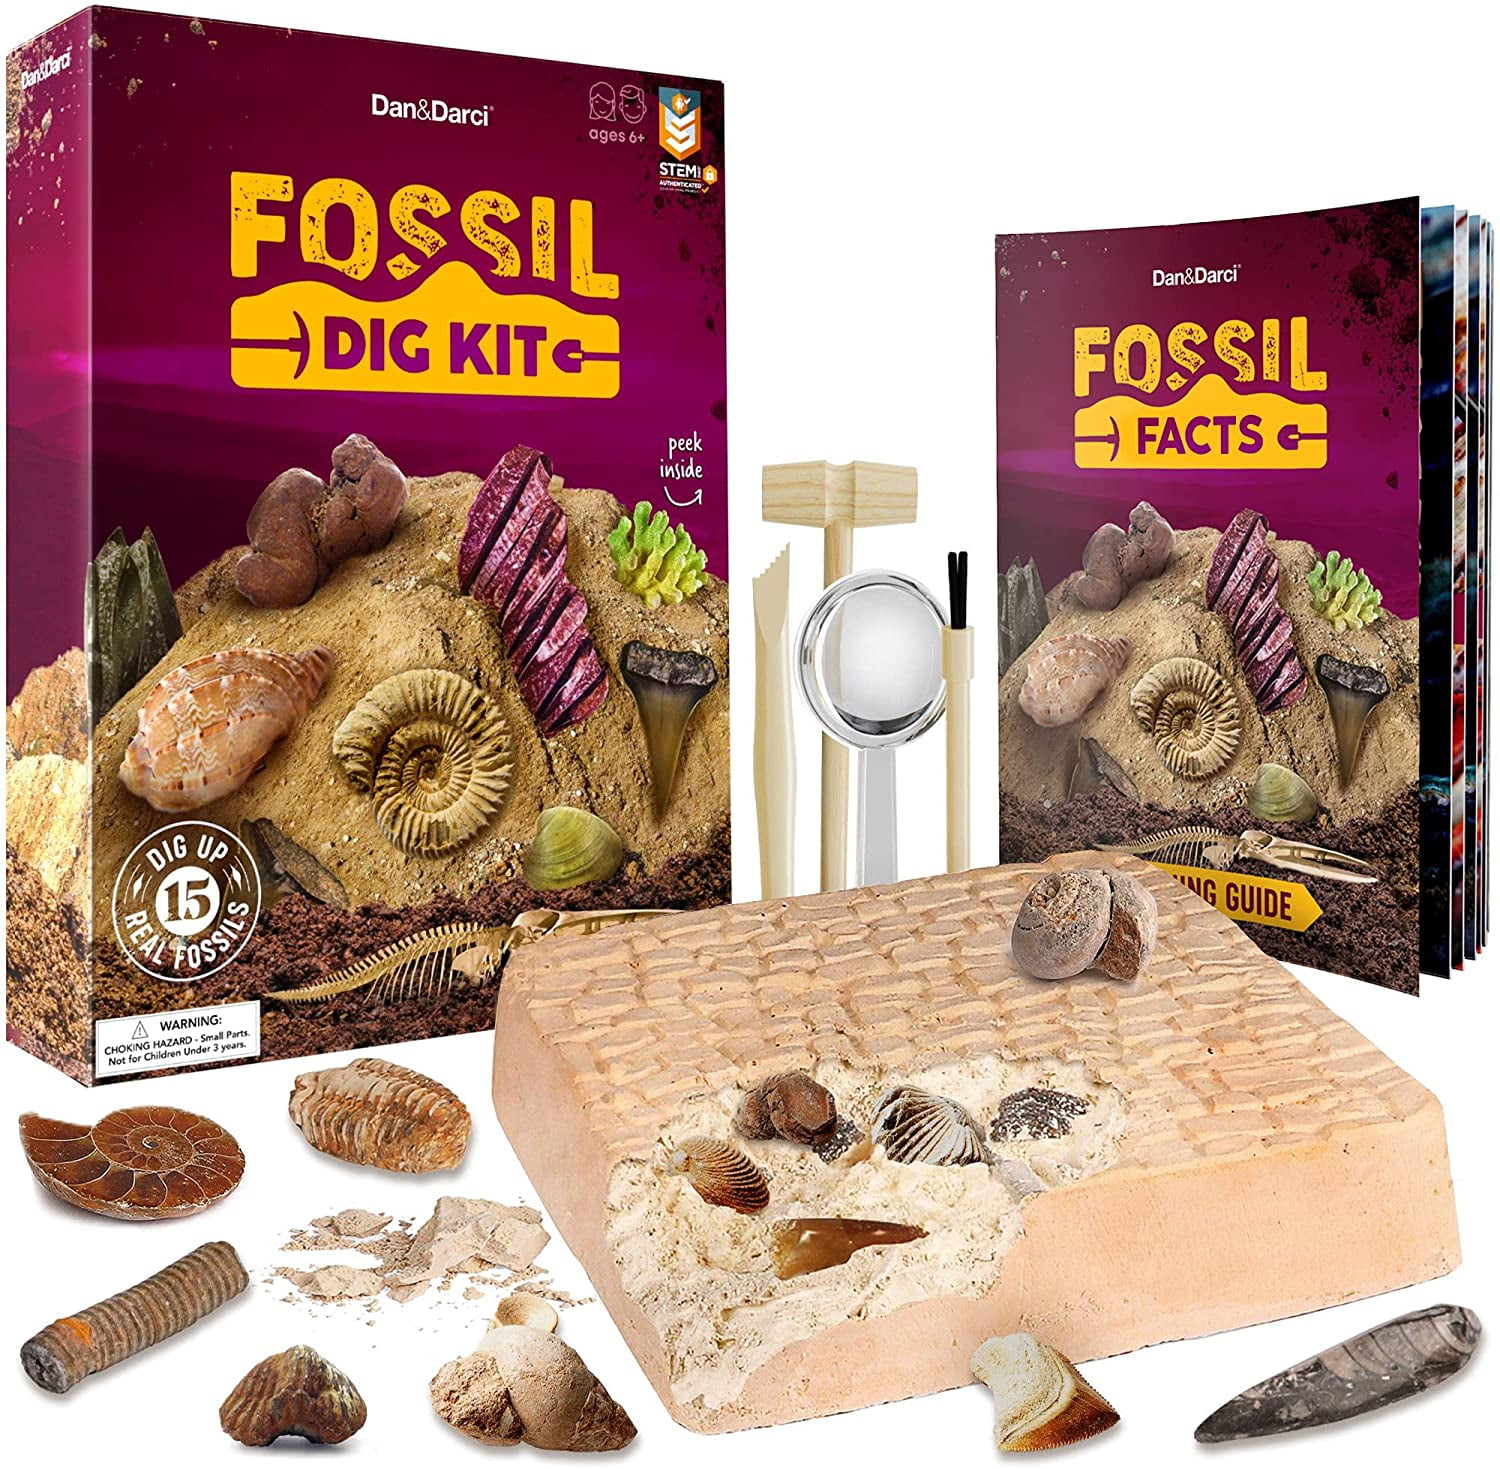 Fossil collection Kit Pack starter set boys girls fossils gift present 